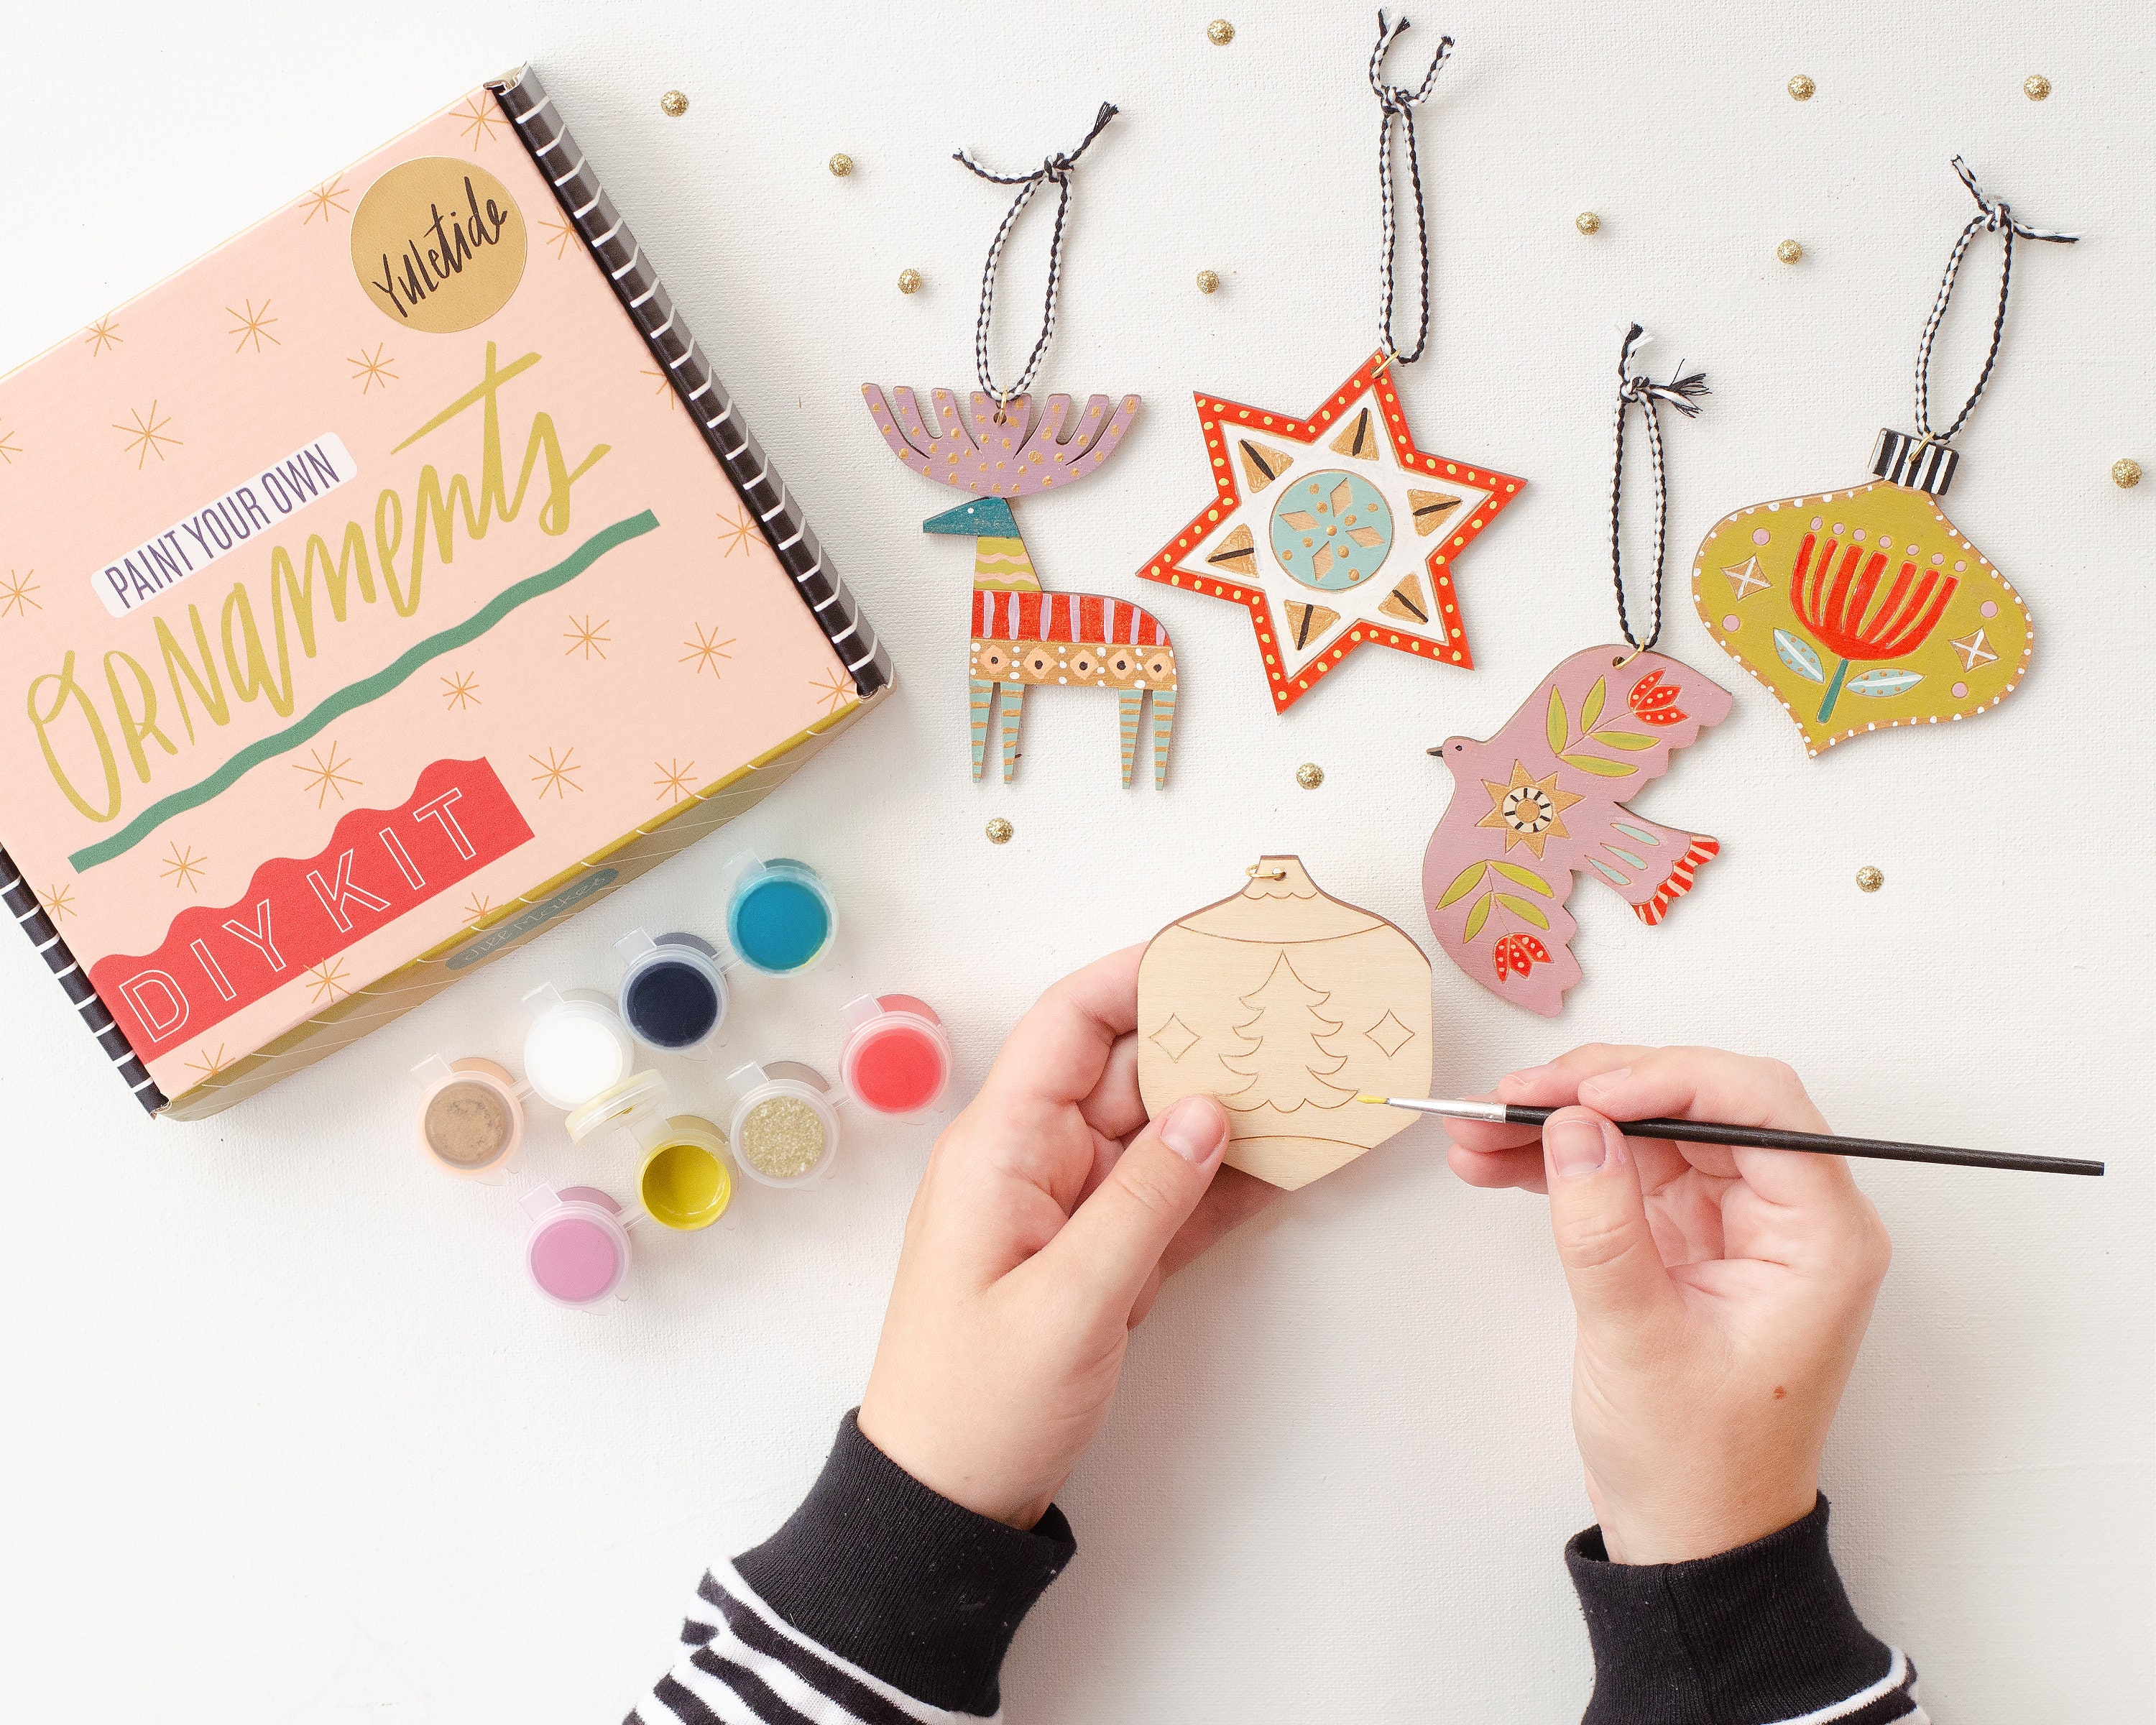 DIY Gift Ideas & Kits that Inspire Creativity  DIY Kits & Ideas for  Holiday Gifts 